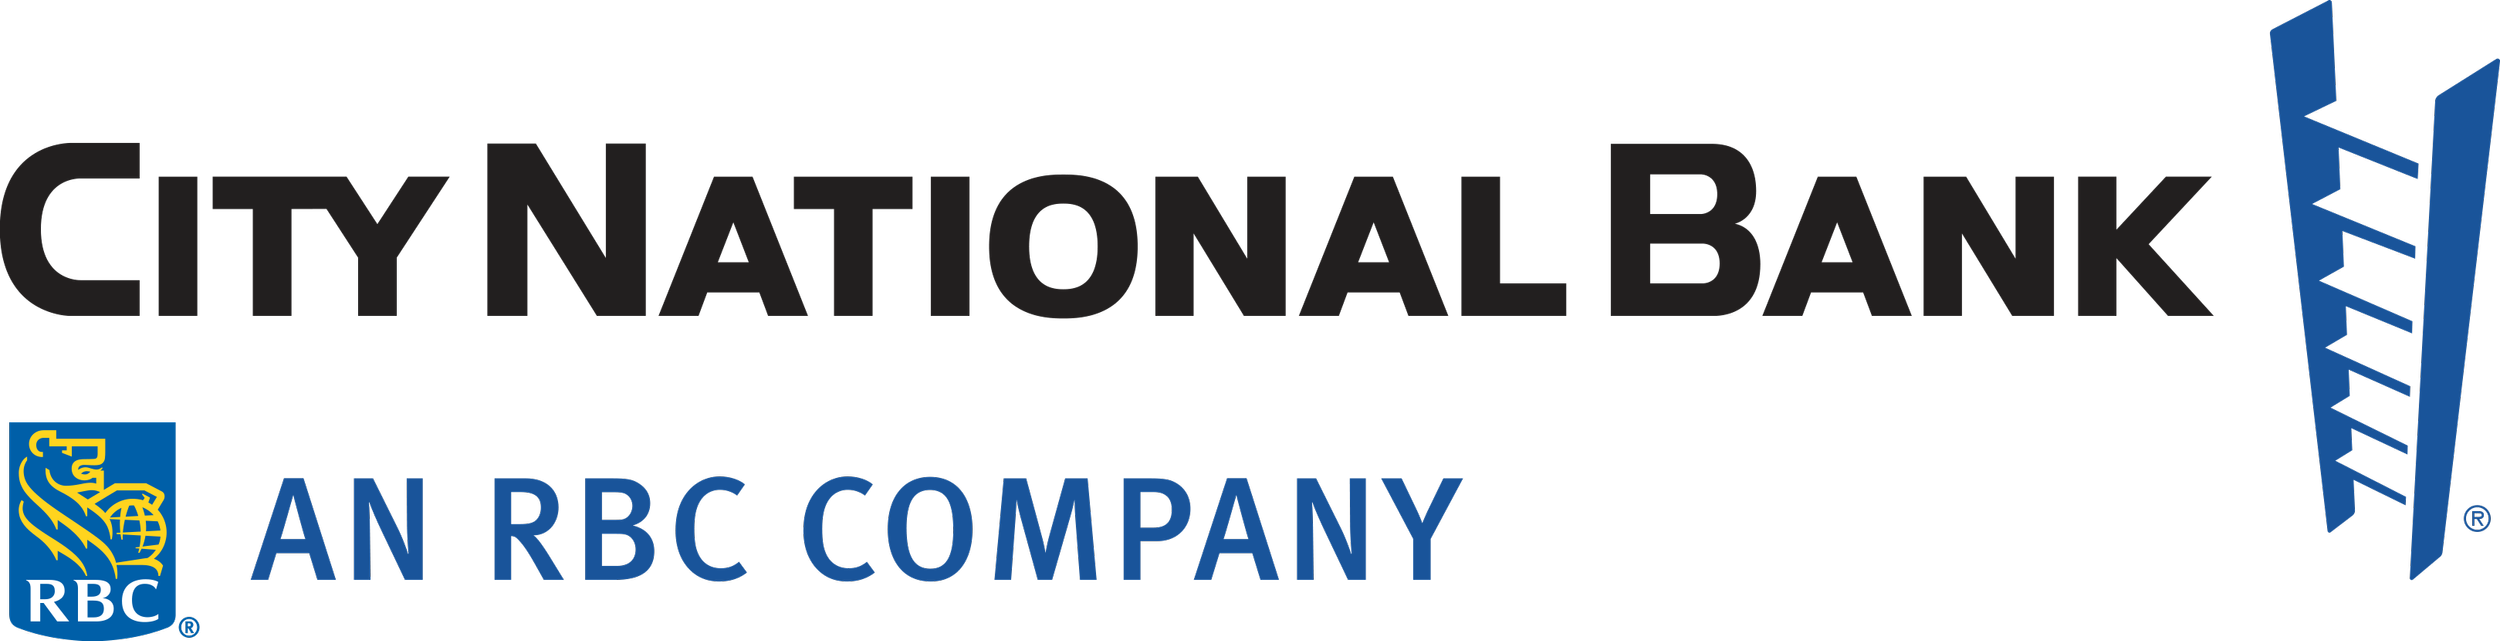 City-National-Bank-Color-Logo-2.png